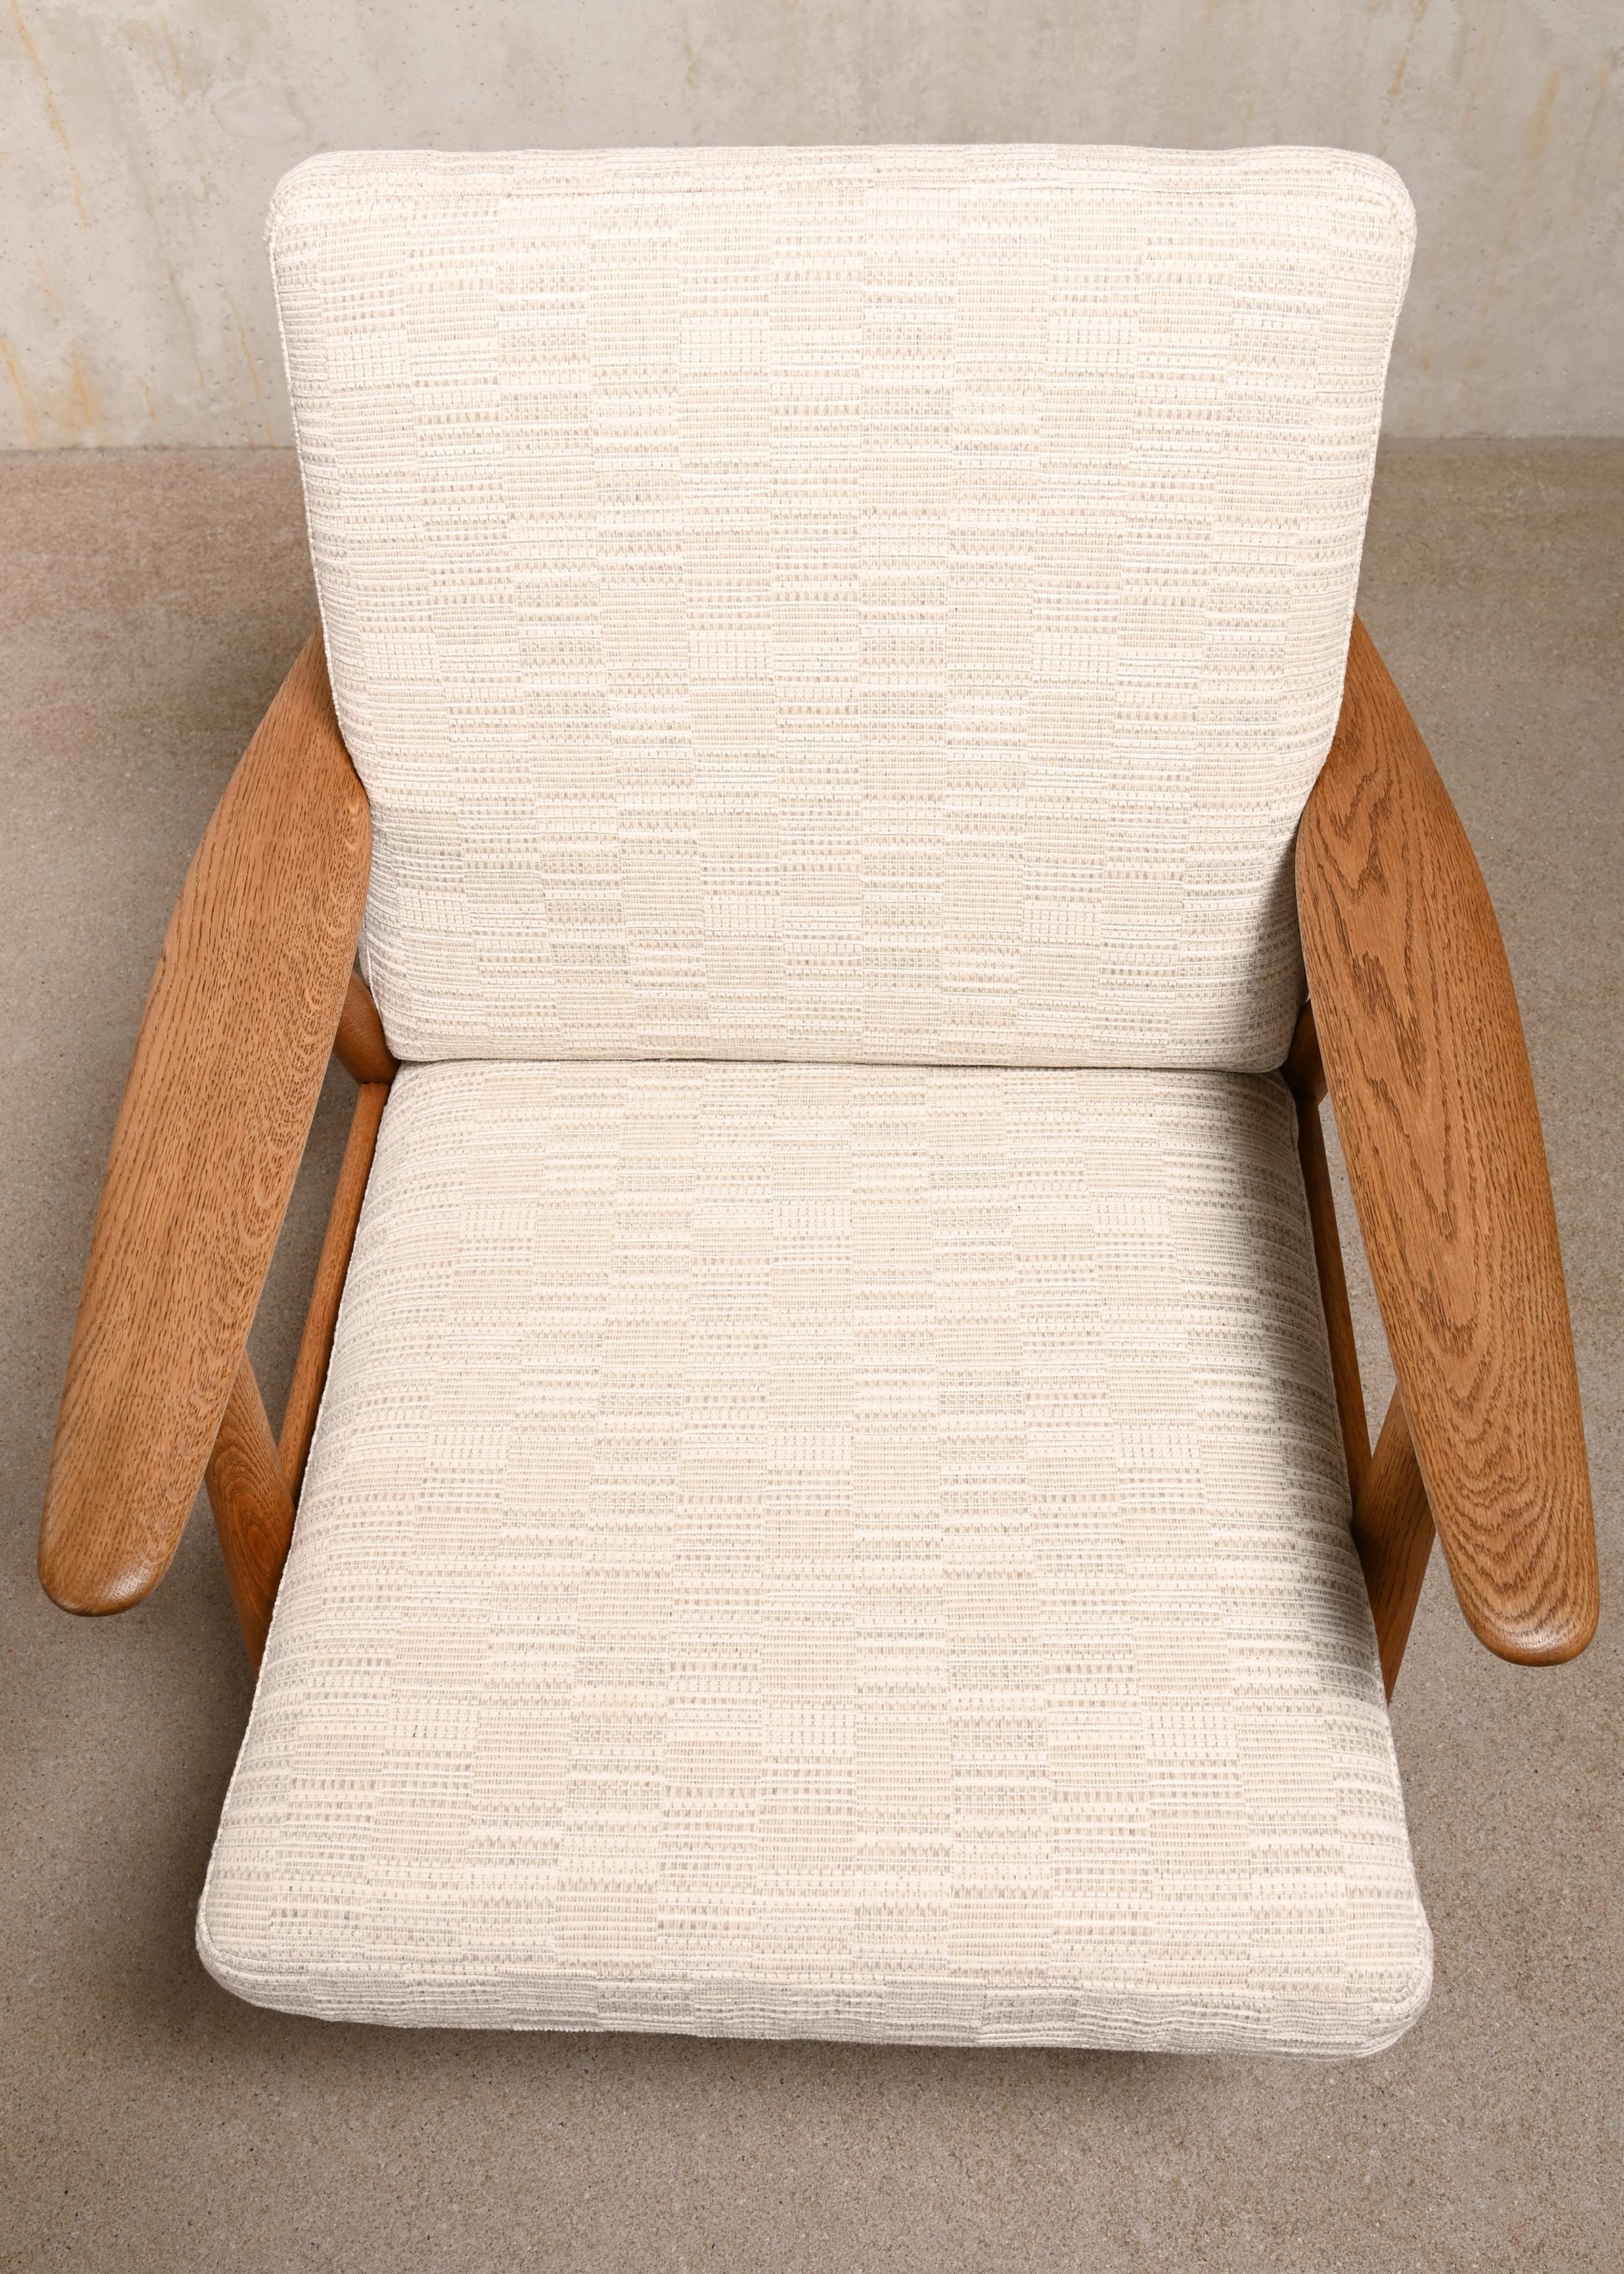 Hans J. Wegner GE240 'Sigar' Lounge Chair in Oak and Pierre Frey Fabric, Denmark 2